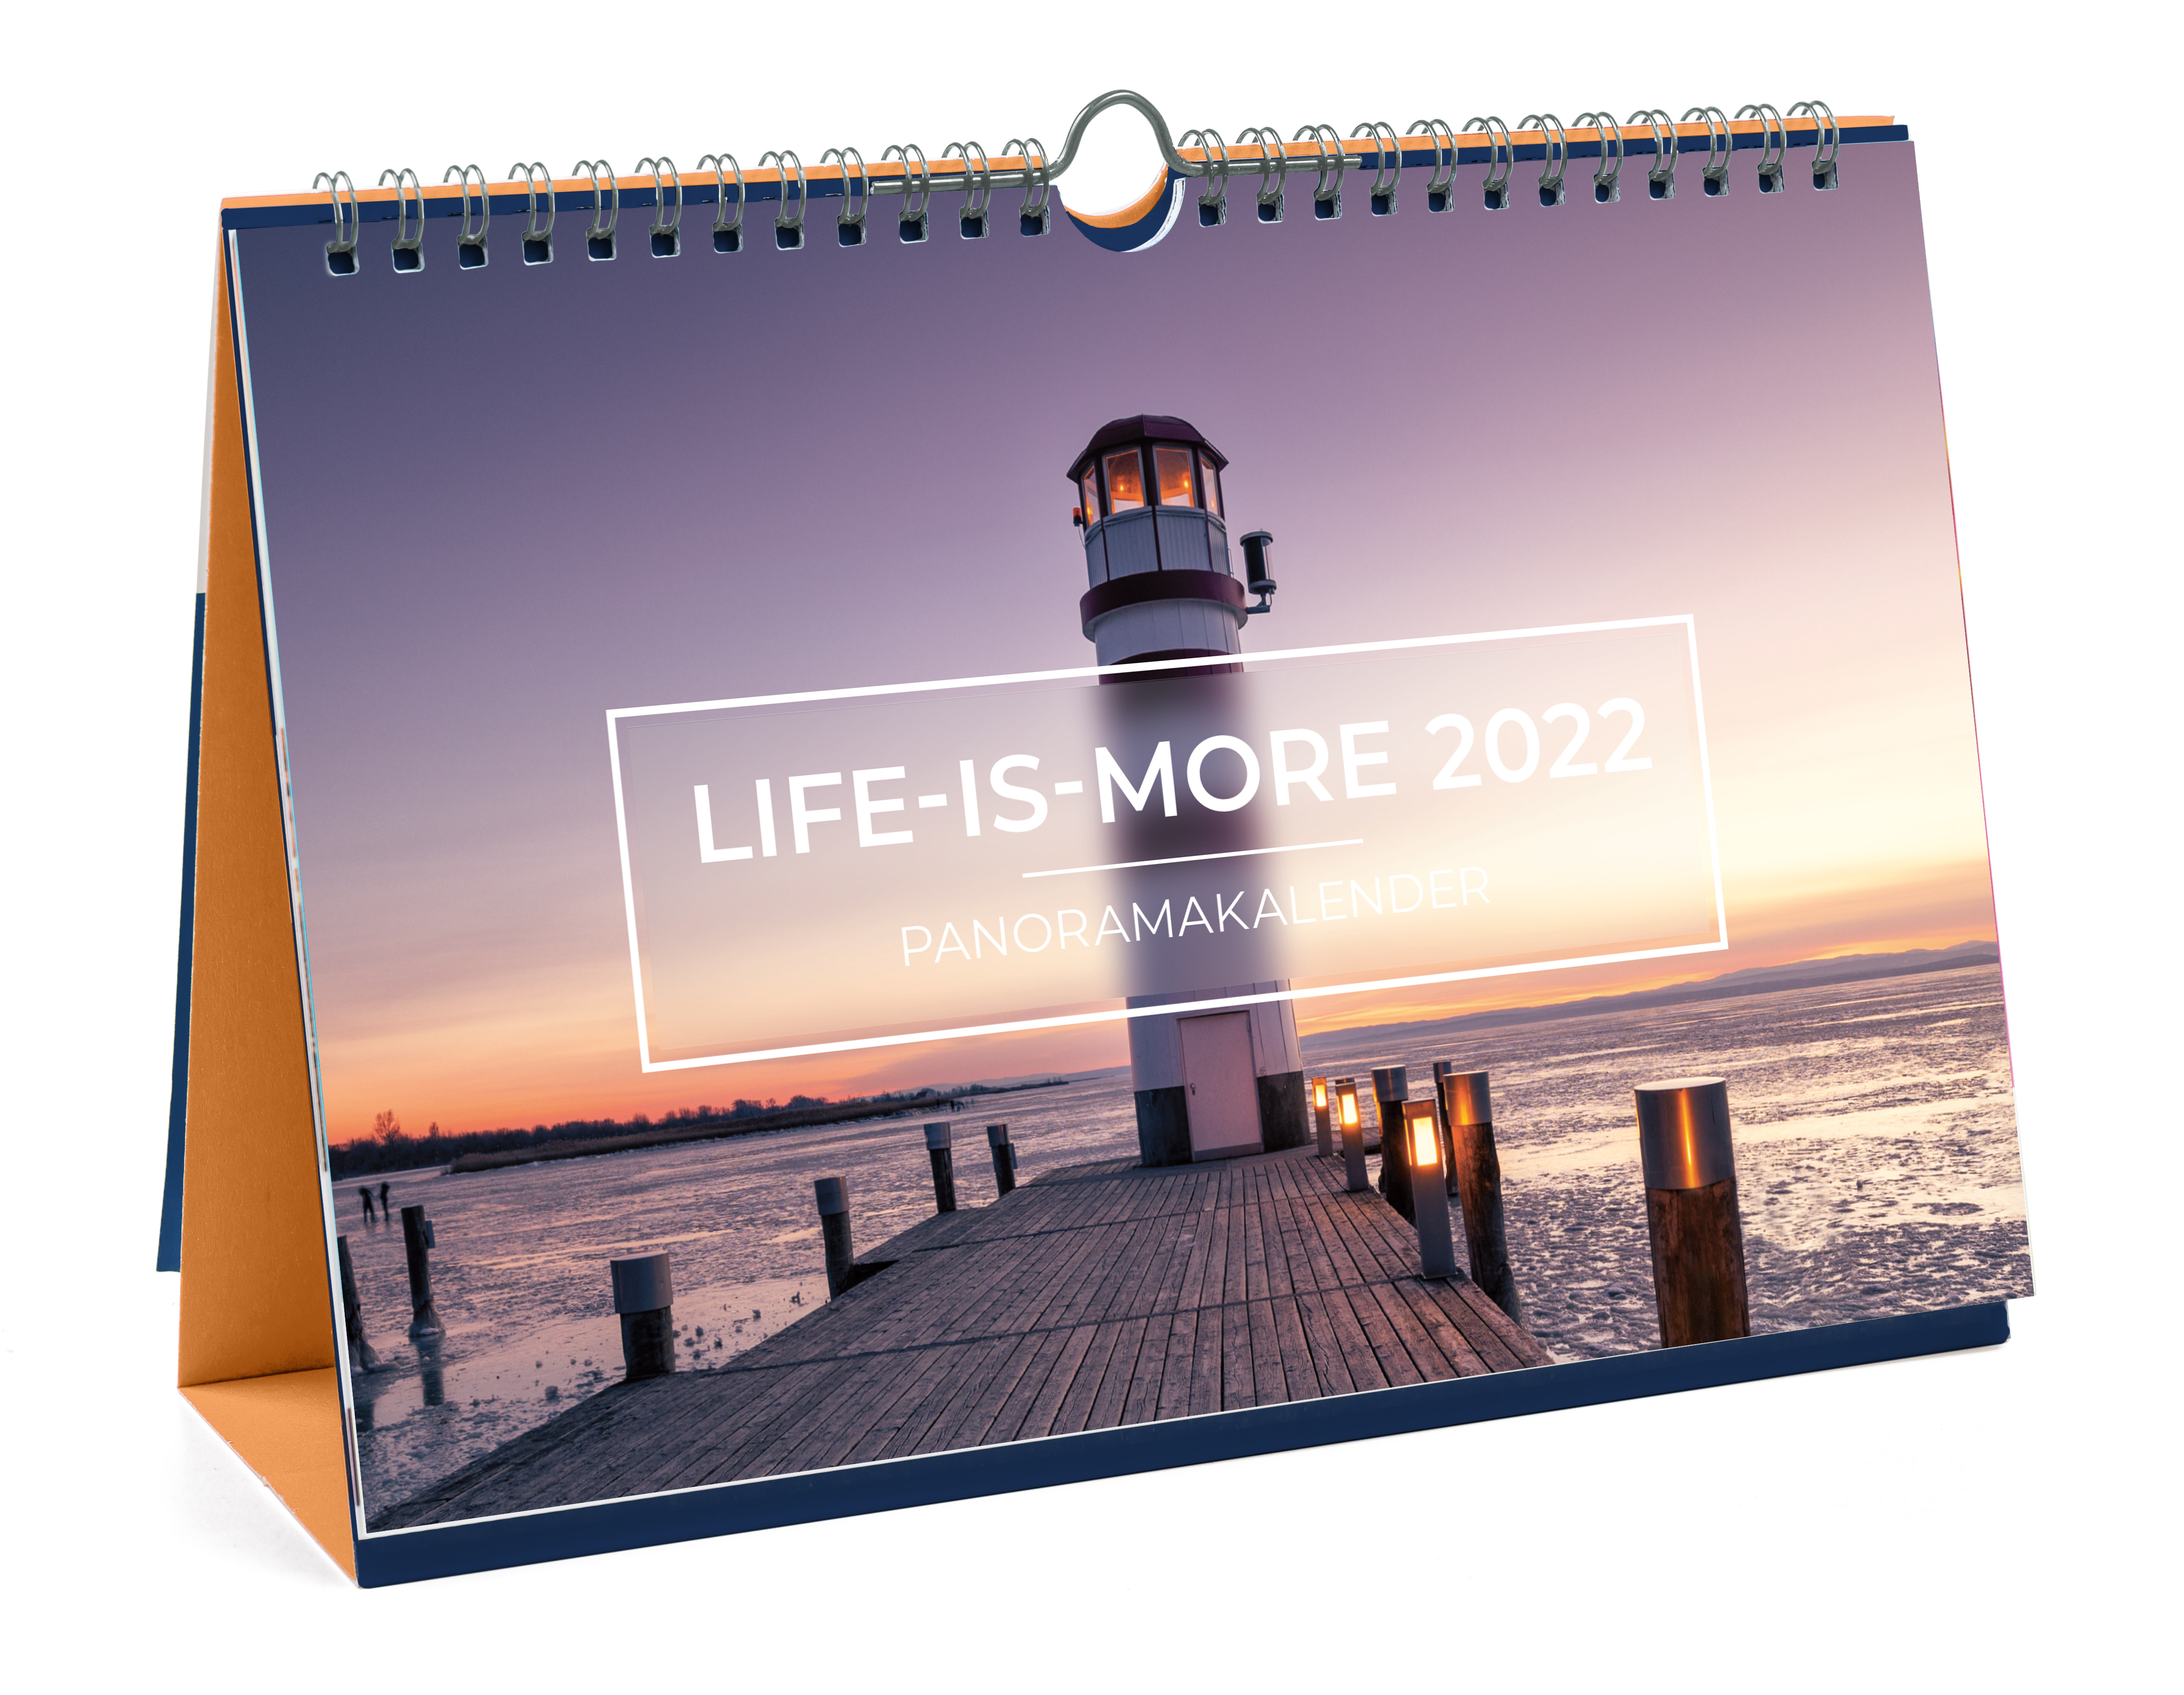 Life-is-More Panoramakalender 2022